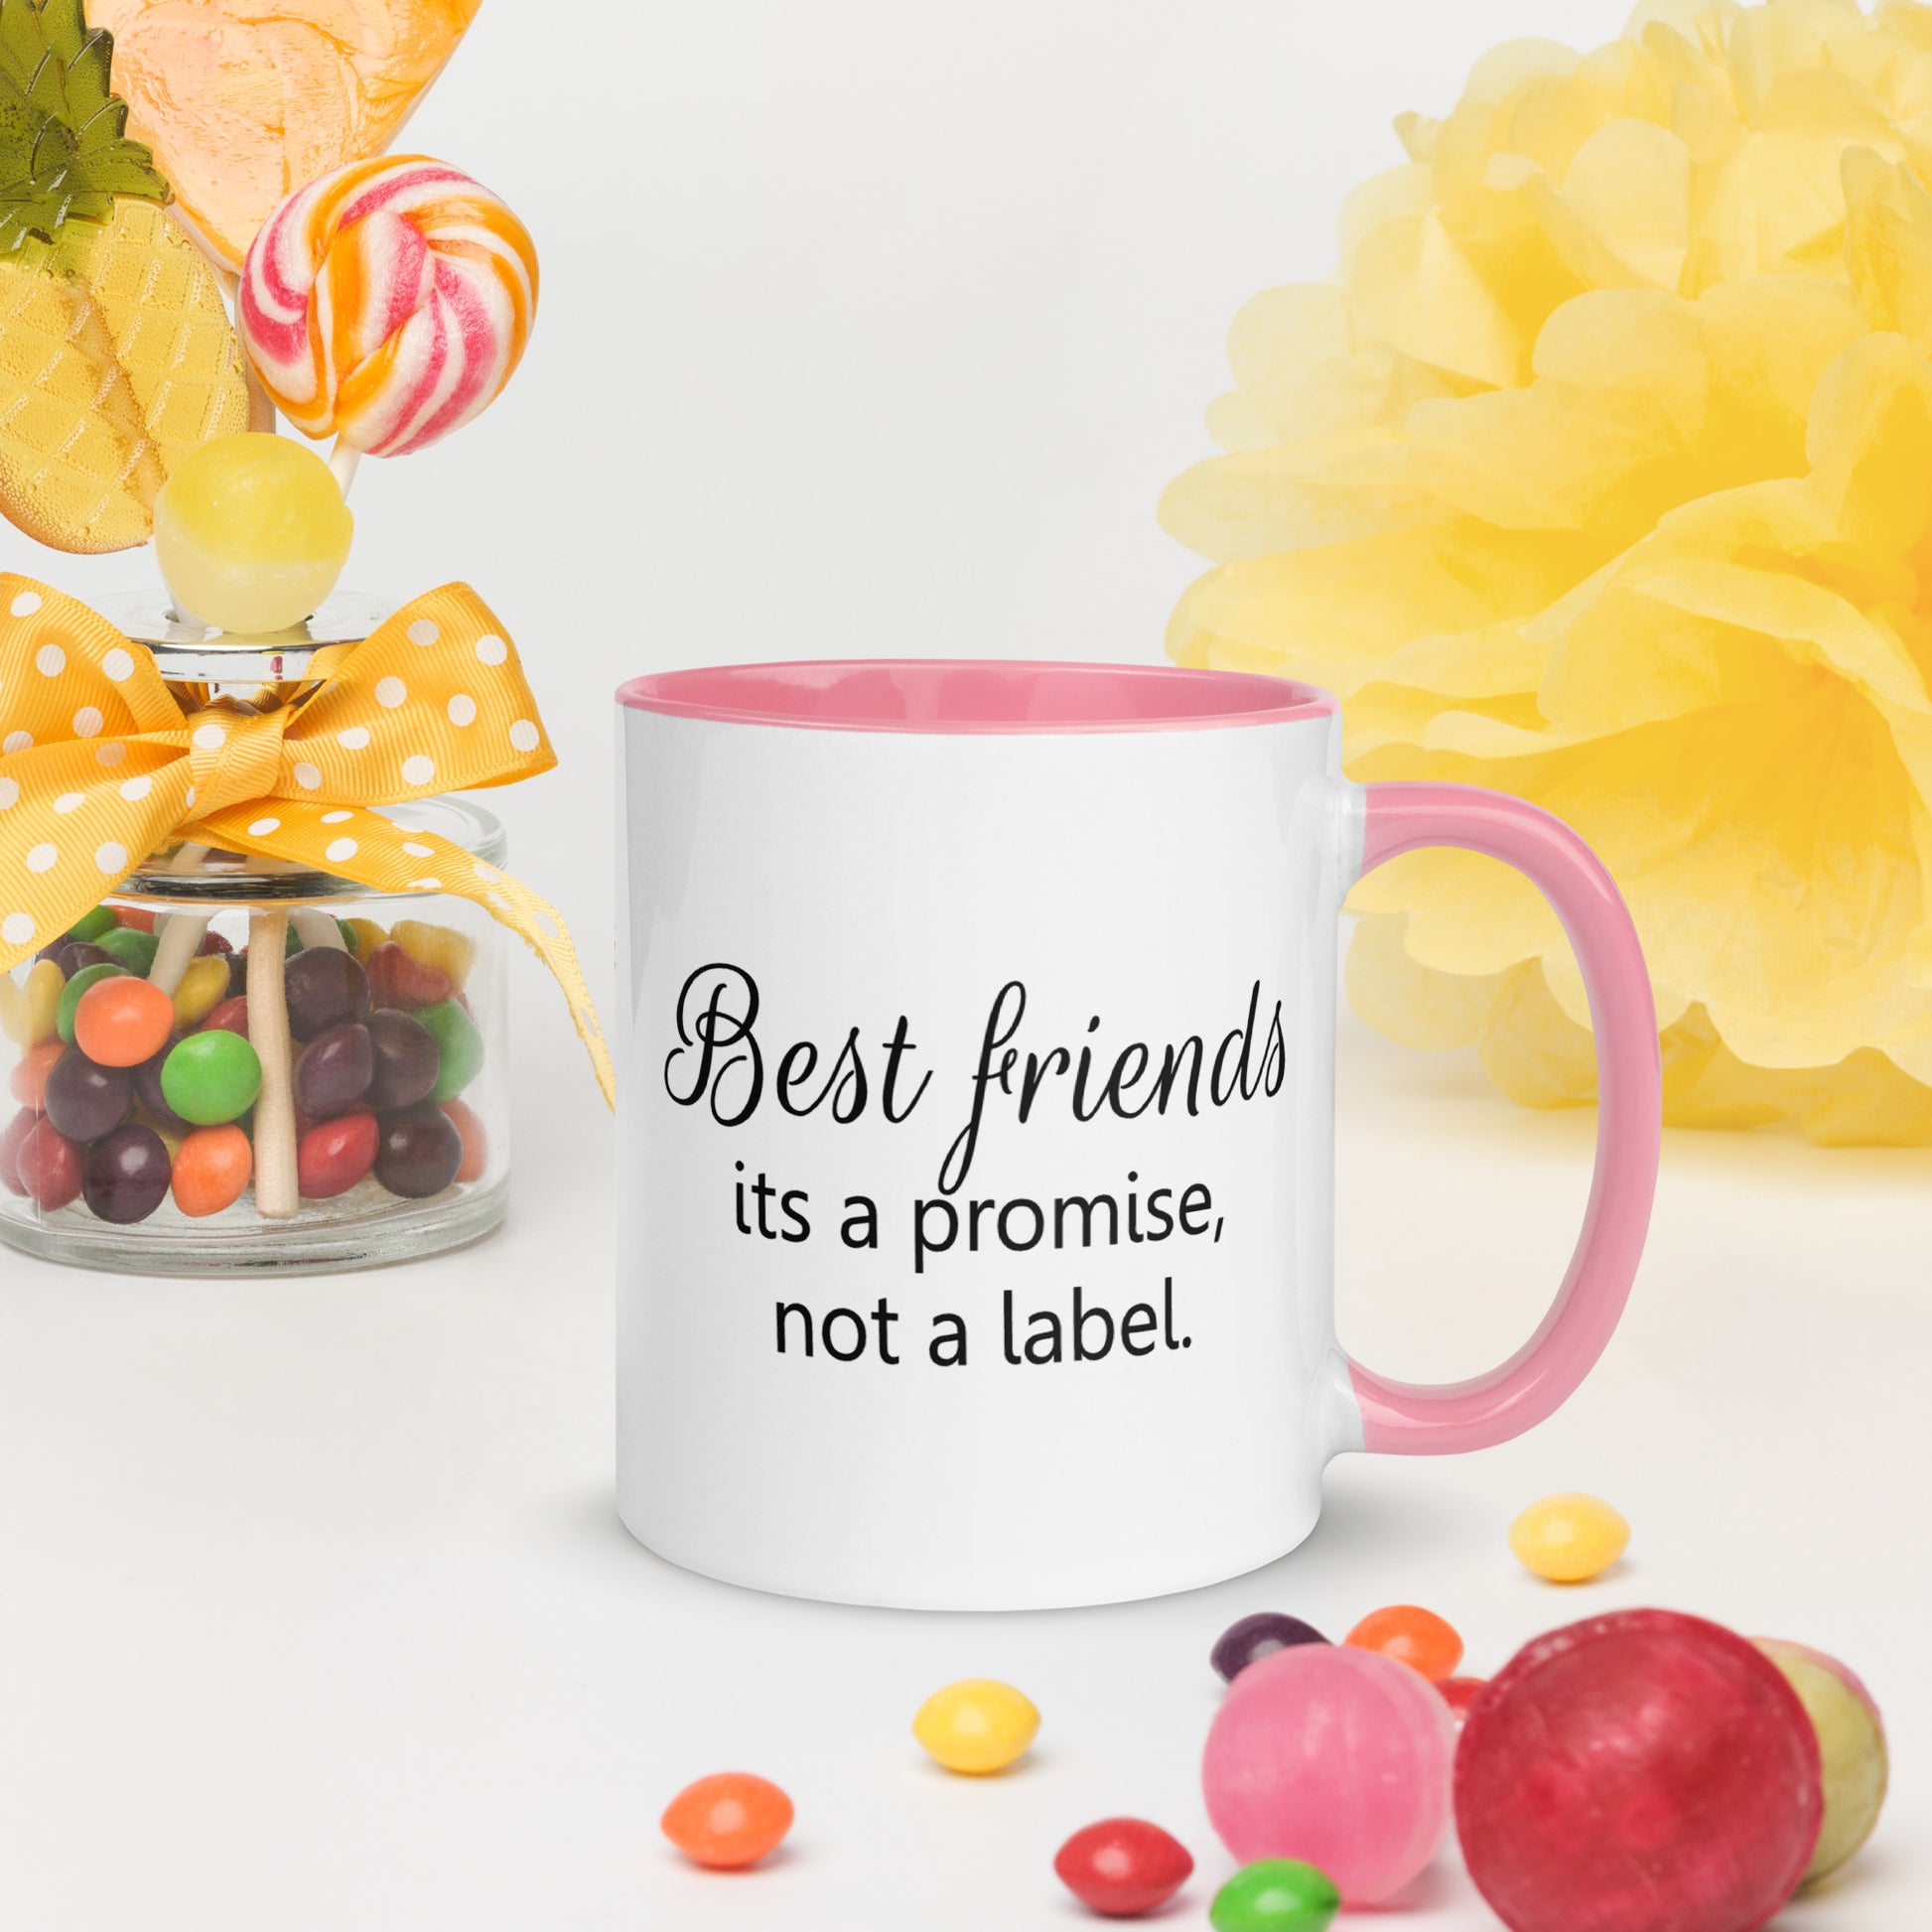 3 best friends mug cute presents for friends